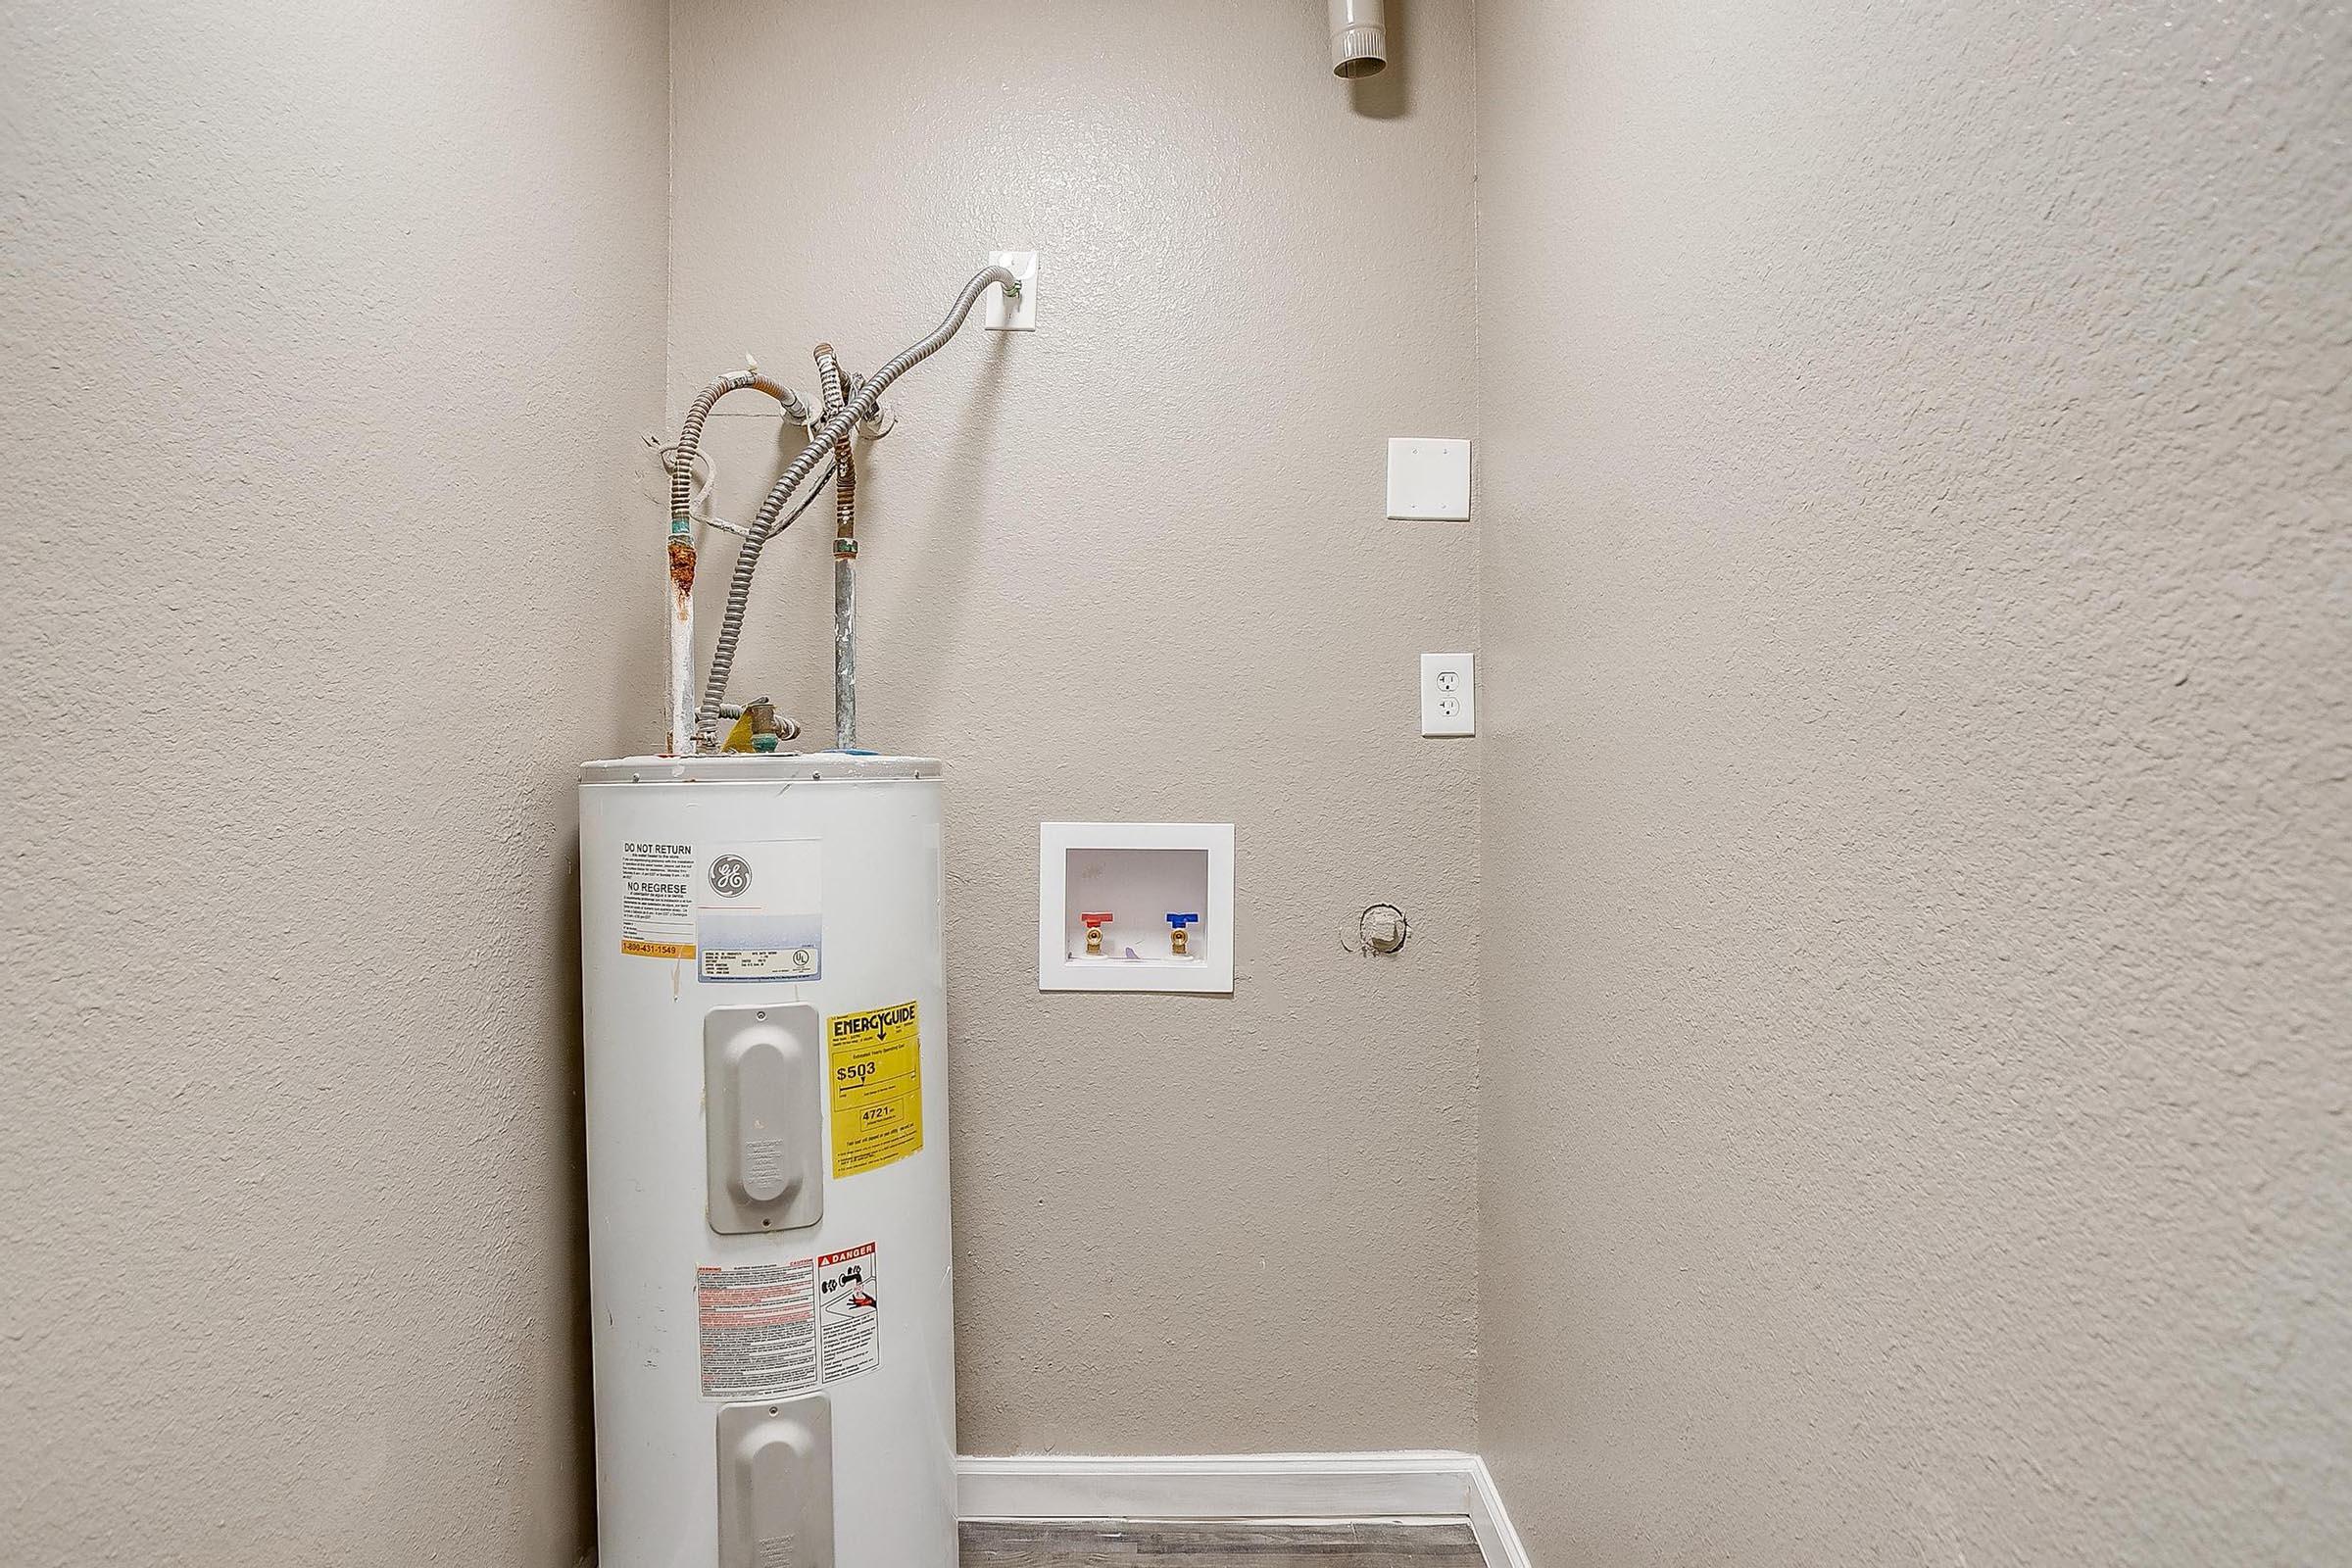 a refrigerator freezer sitting inside of a building